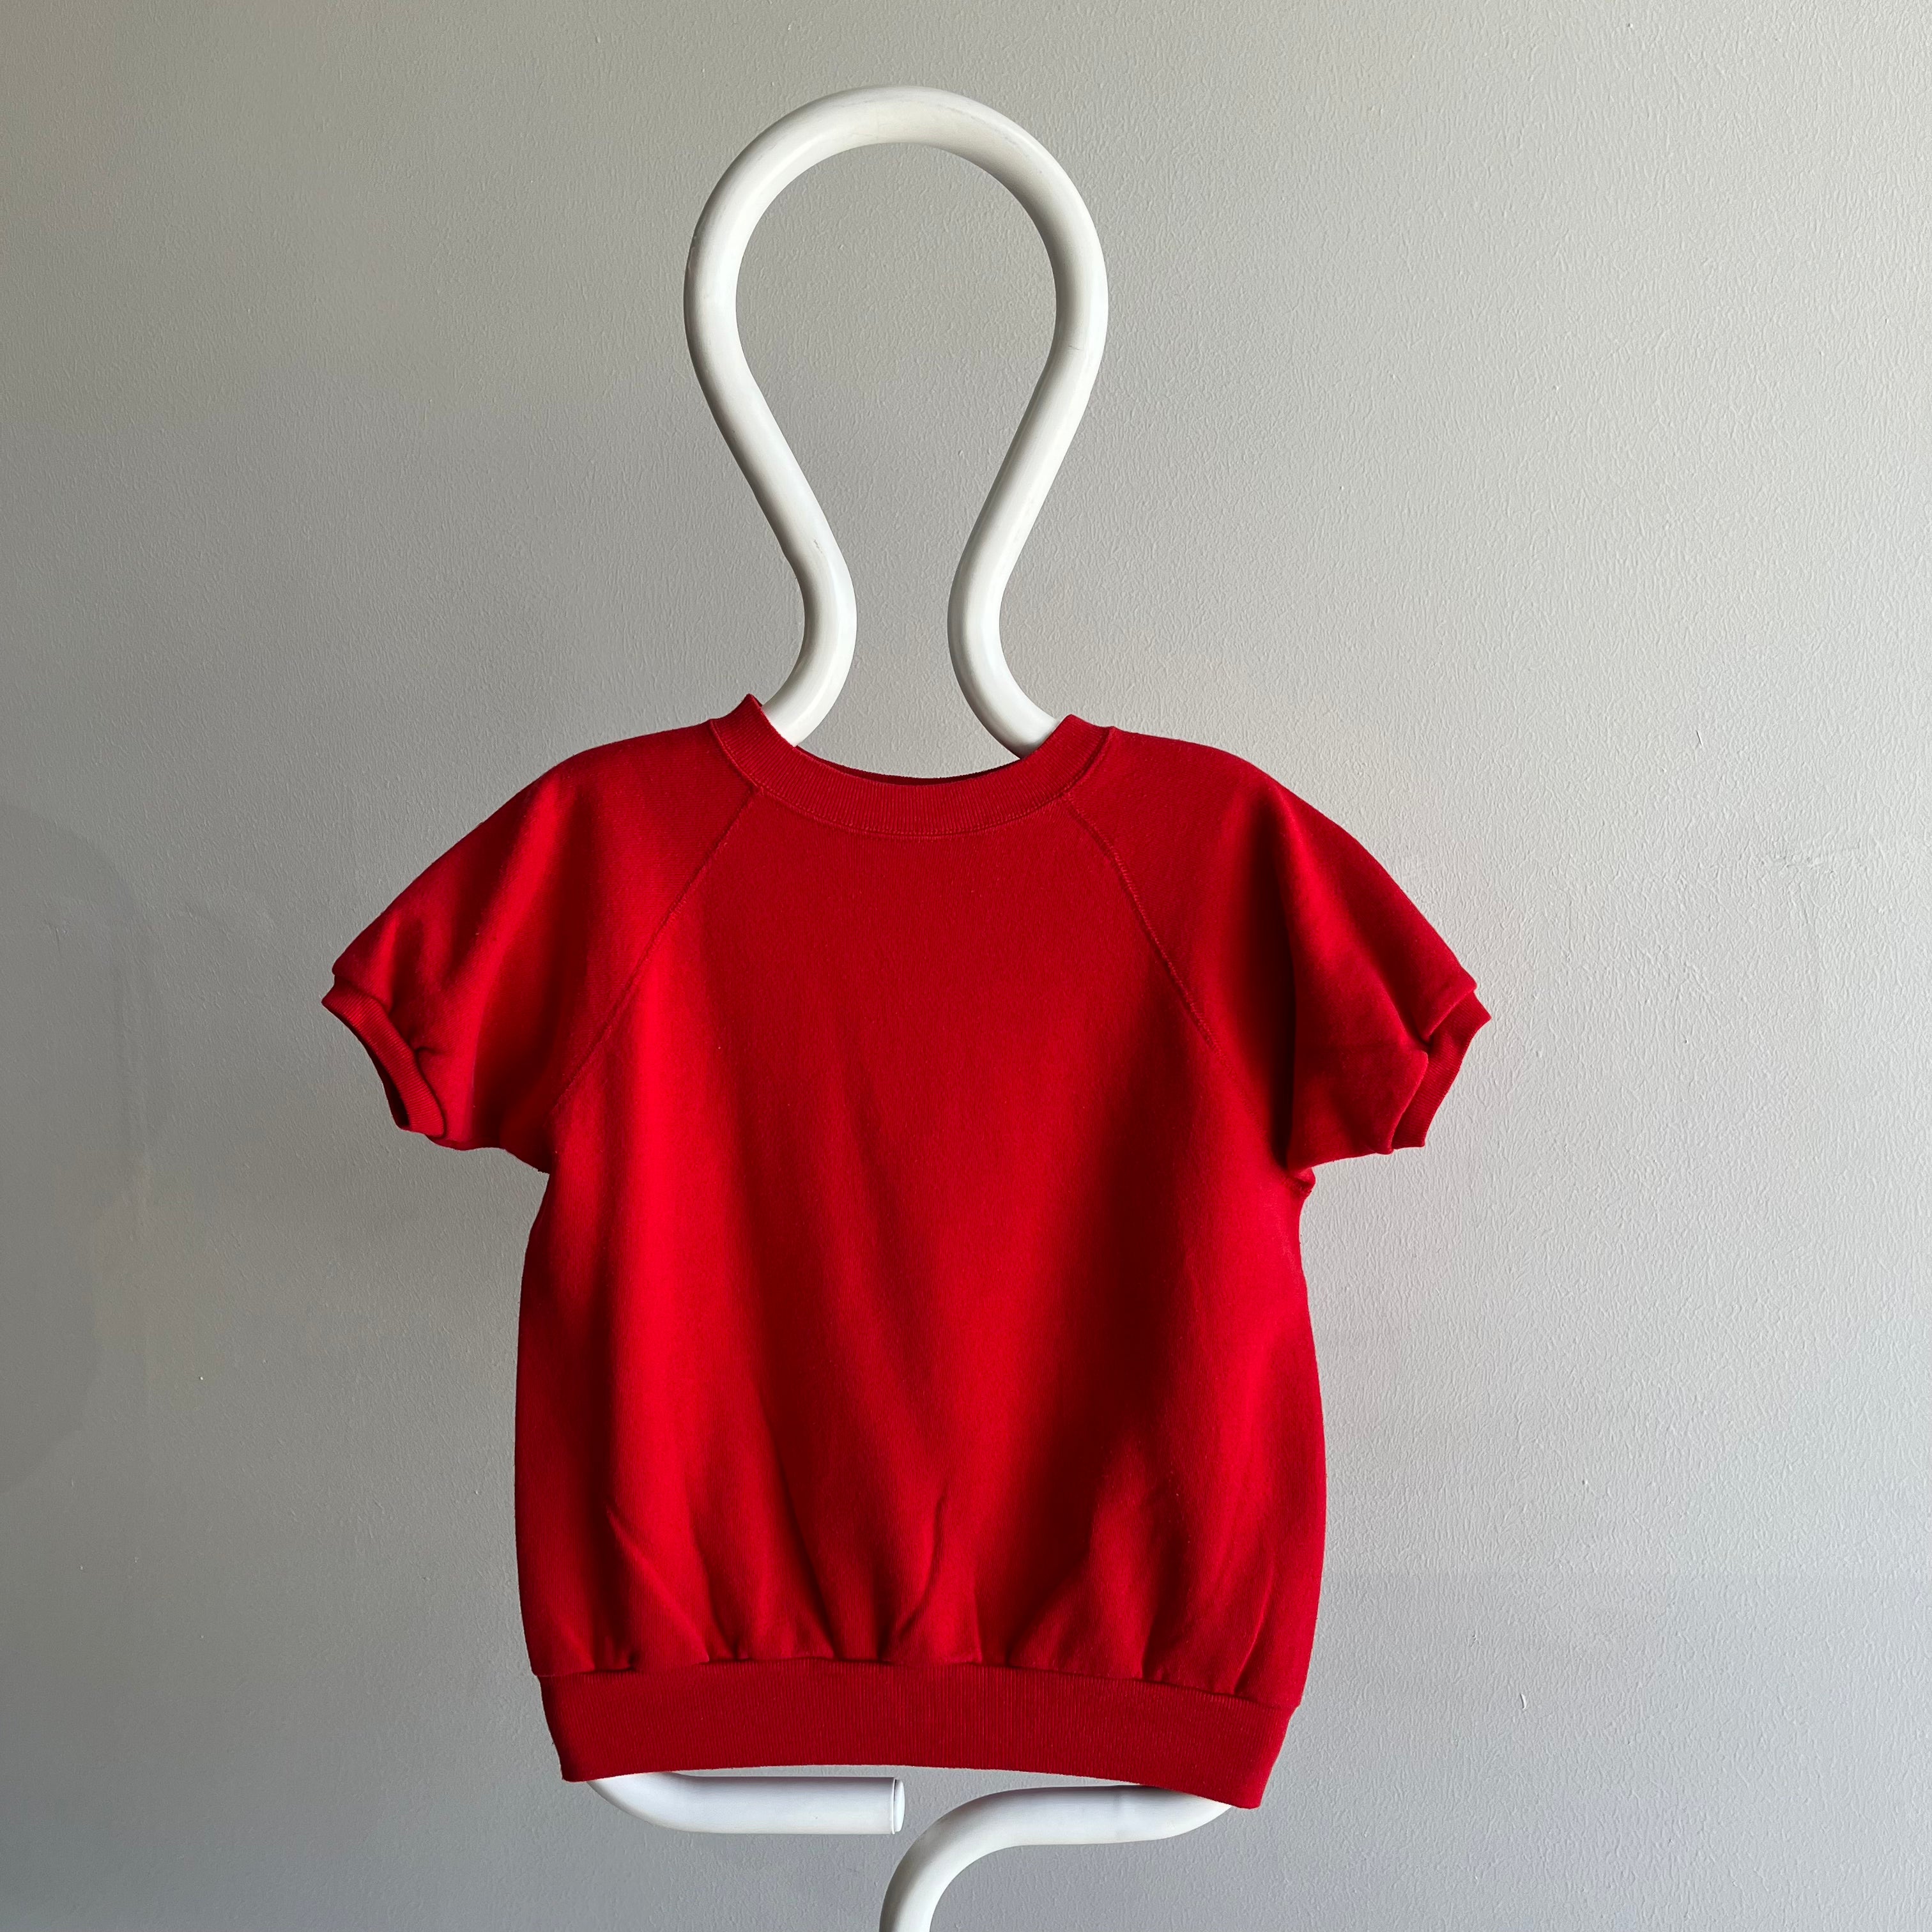 1980s Blank Red Warm Up Short Sleeve Sweatshirt